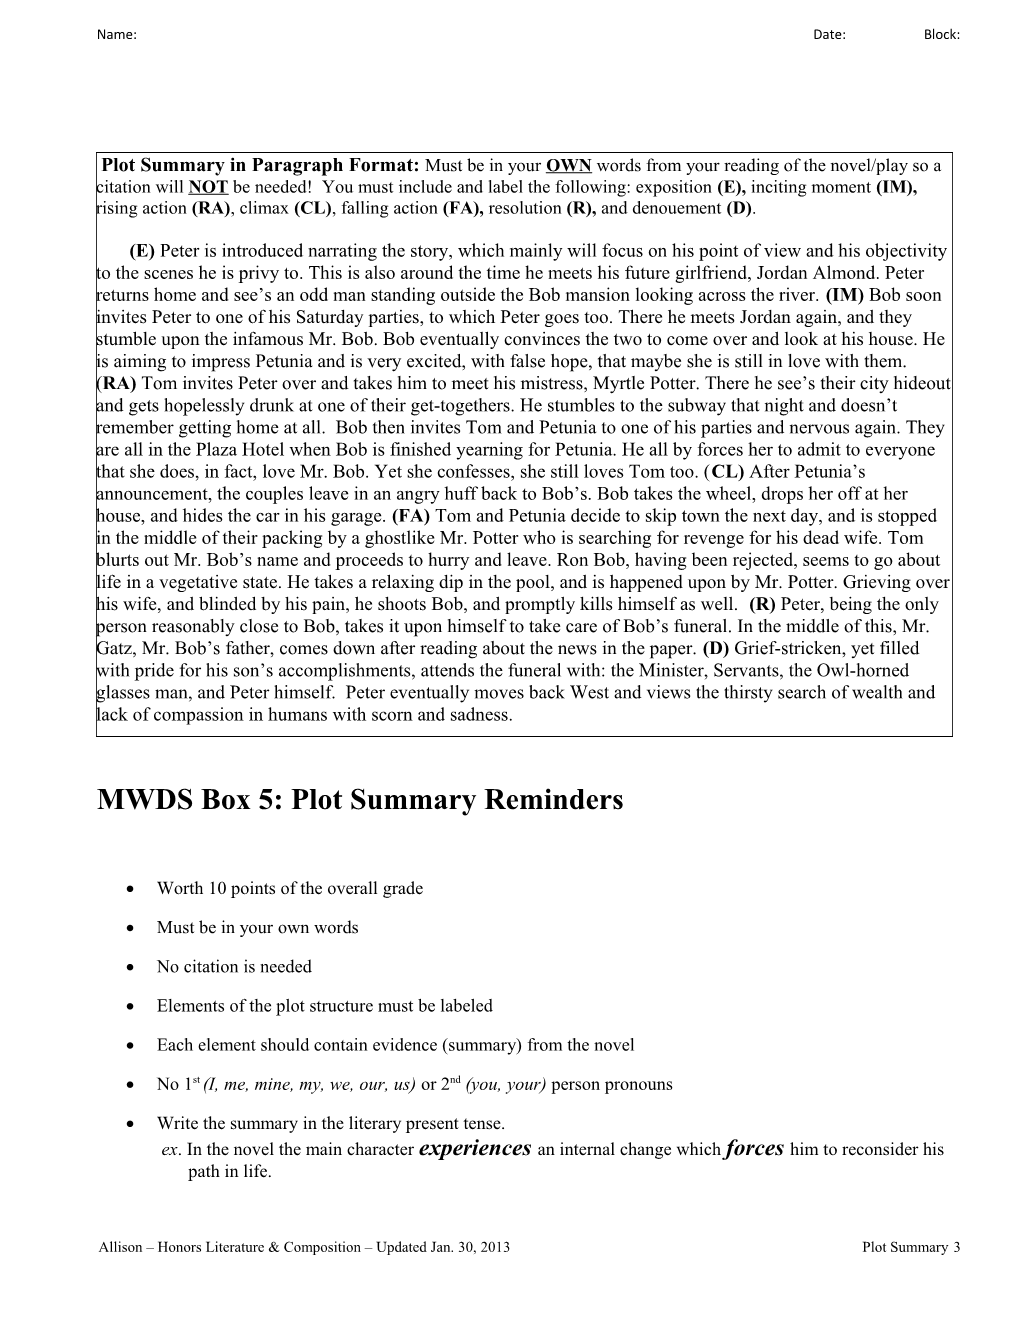 MWDS Box 5: Plot Summary - the Elements of Plot